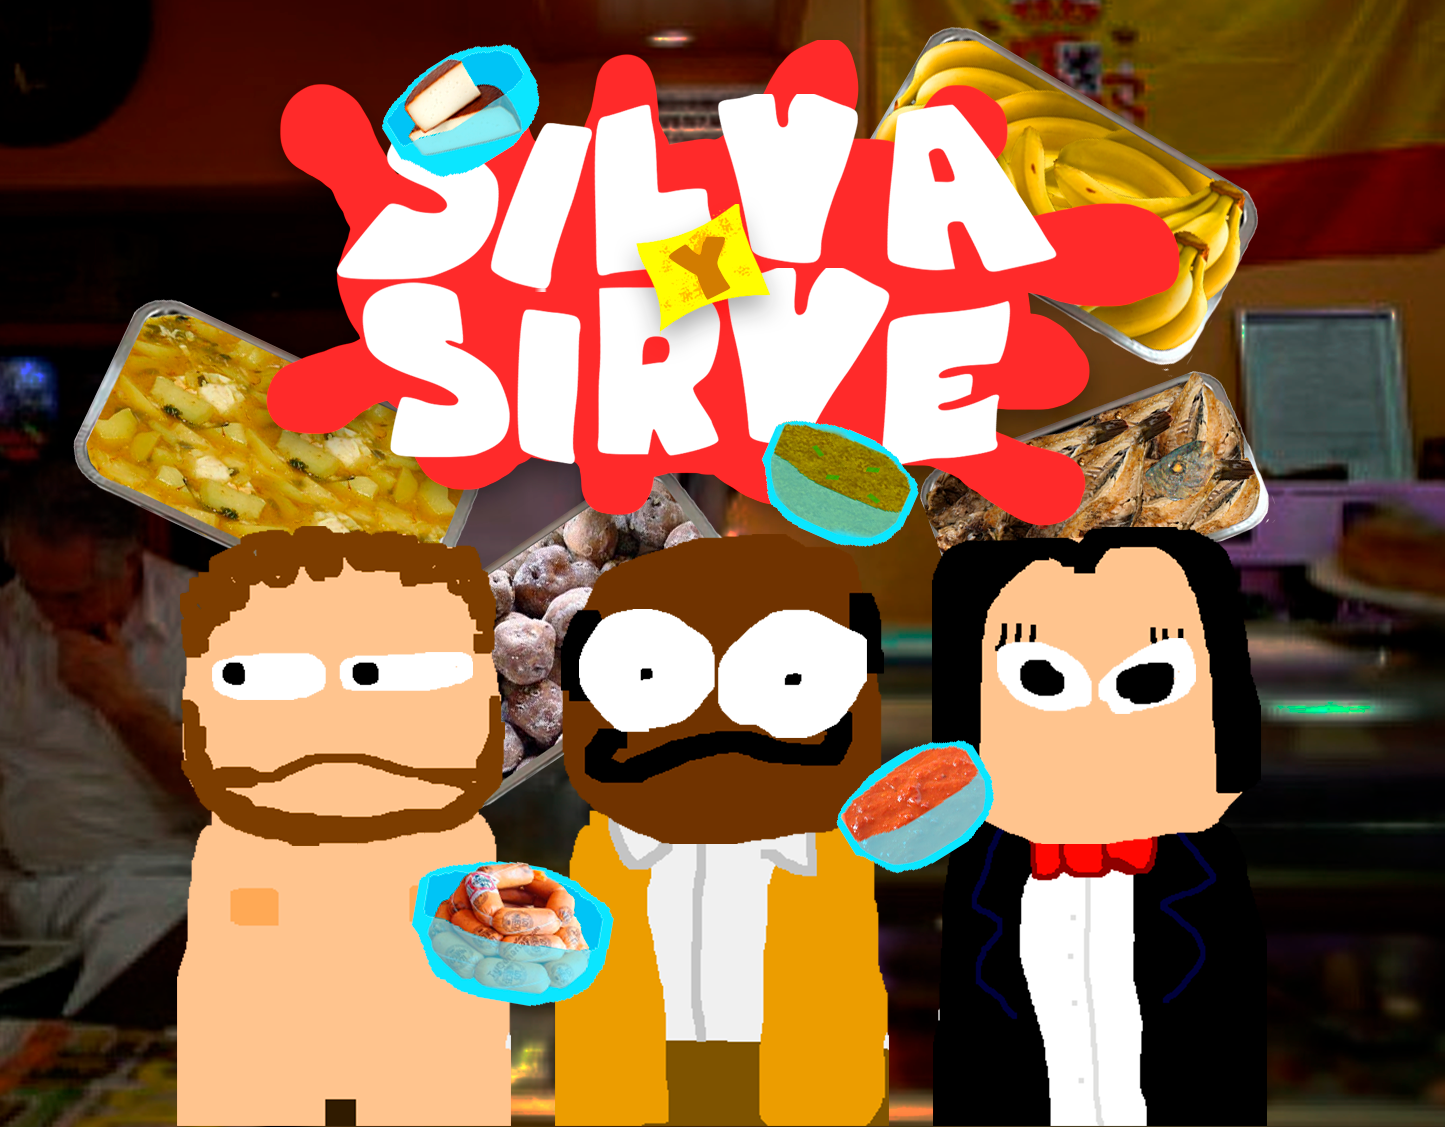 Silva Y Sirve